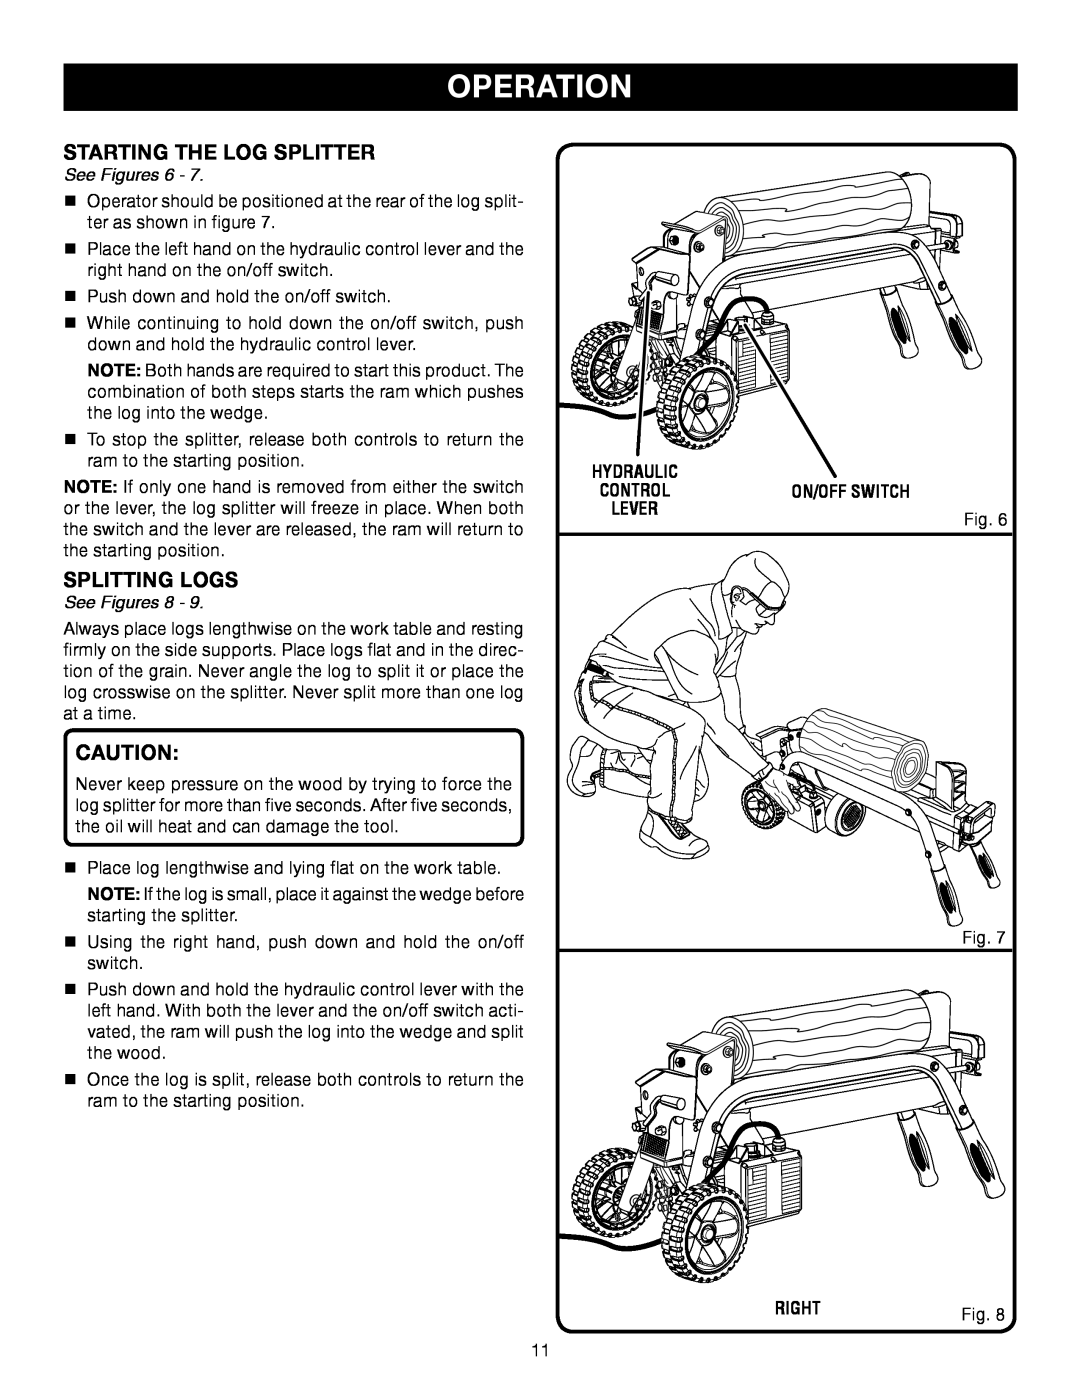 Ryobi Outdoor RY49701 manual Starting The Log Splitter, Splitting Logs, Operation, See Figures 